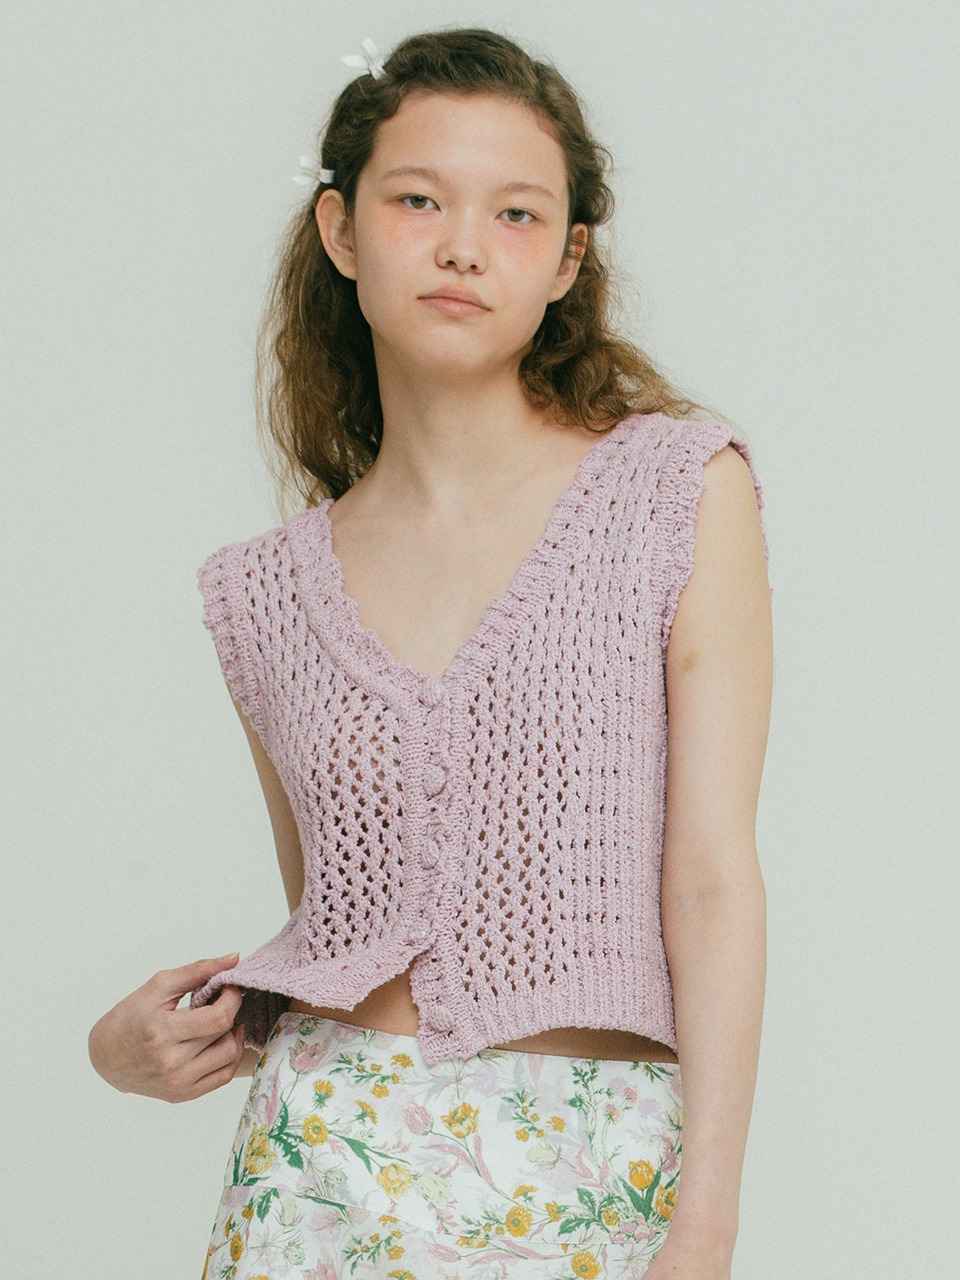 Scallop Crochet Knit Vest VC2333KV002M